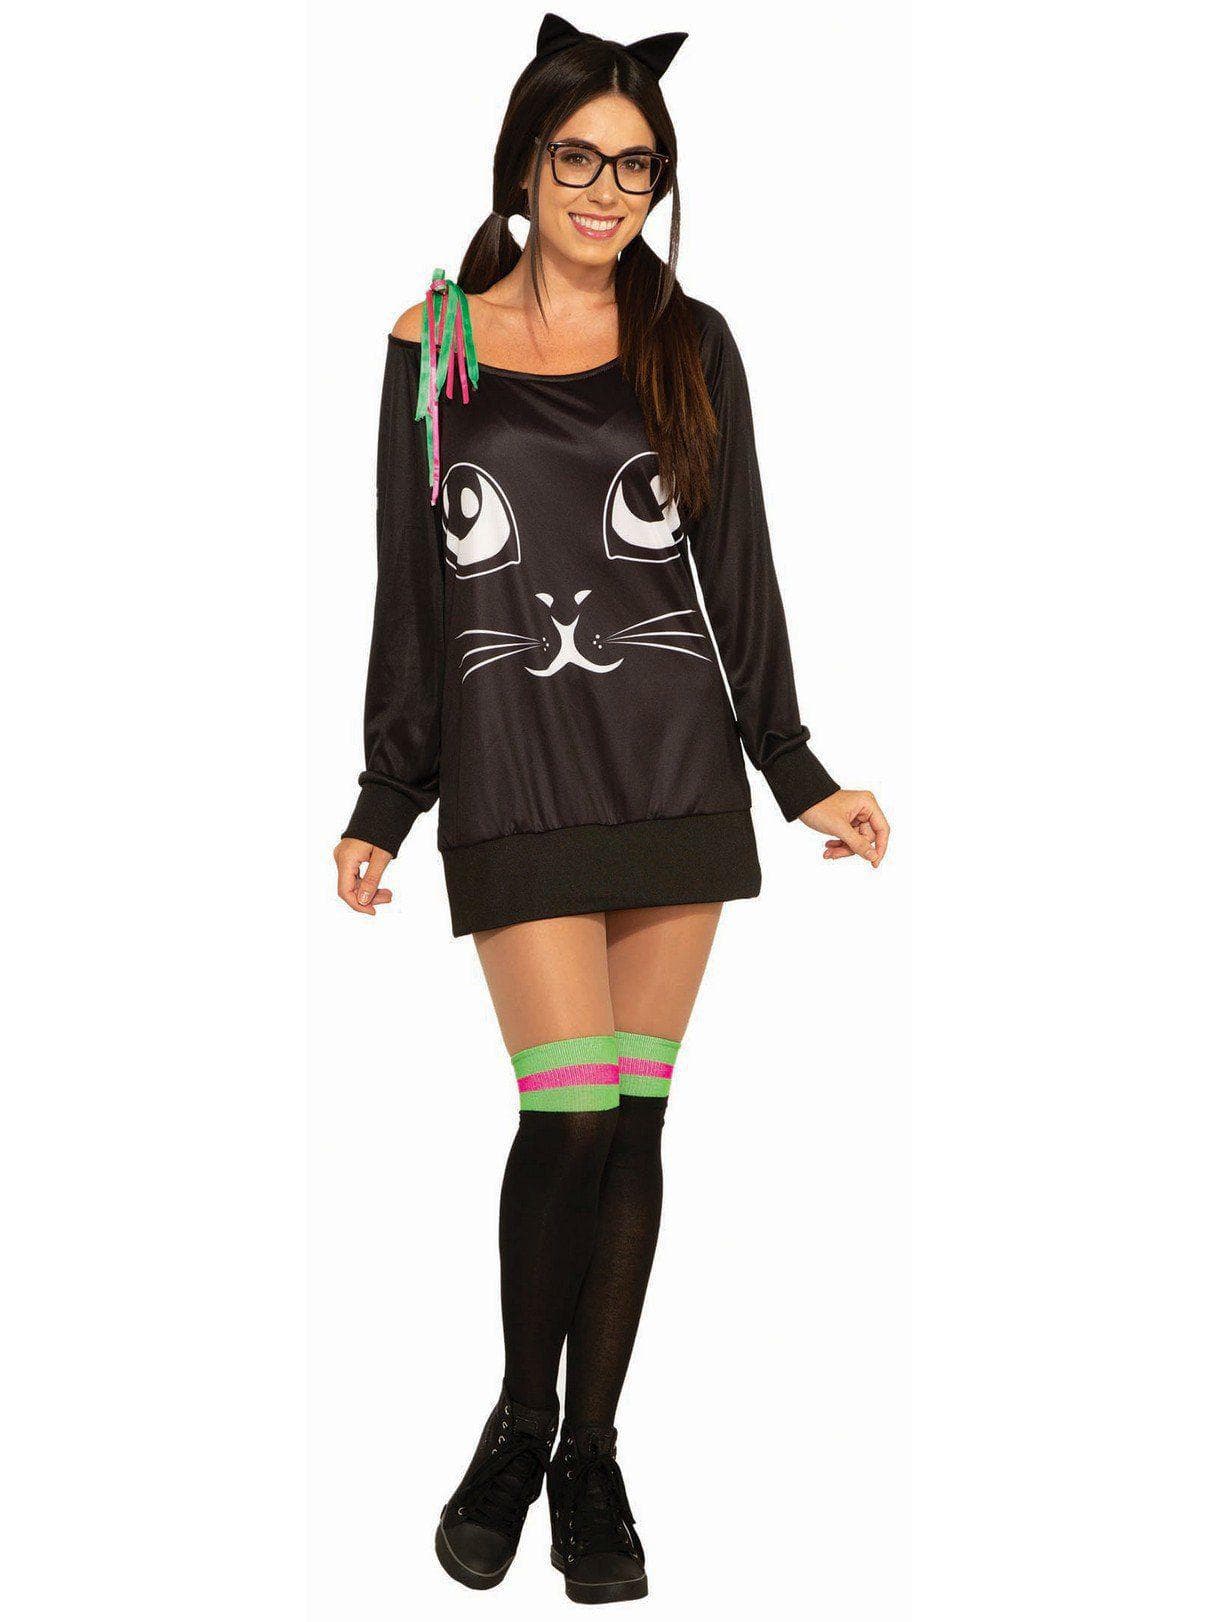 Adult Ed Kitty Costume - costumes.com